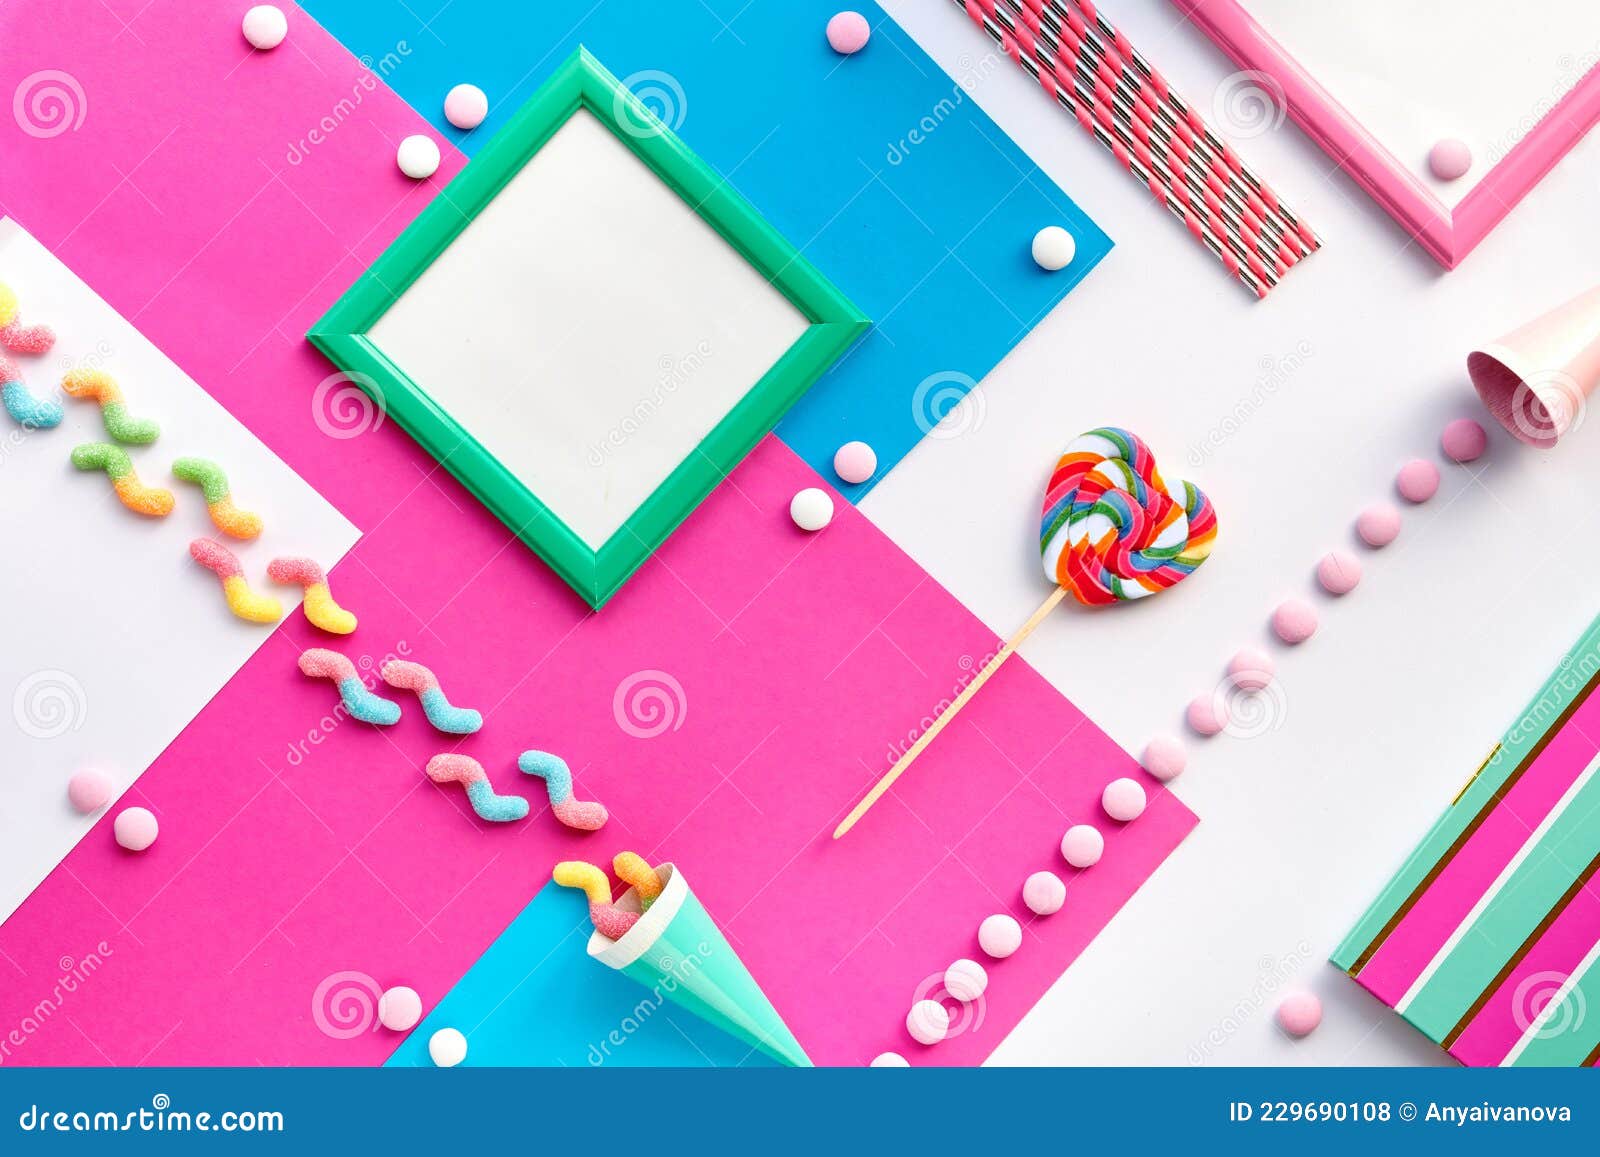 Sweets on Geometric Celebration Decor Background. Birthday Decorations.  Chocolate, Candy and Rainbow Lollipop Swirl Stock Photo - Image of deco,  ball: 229690108